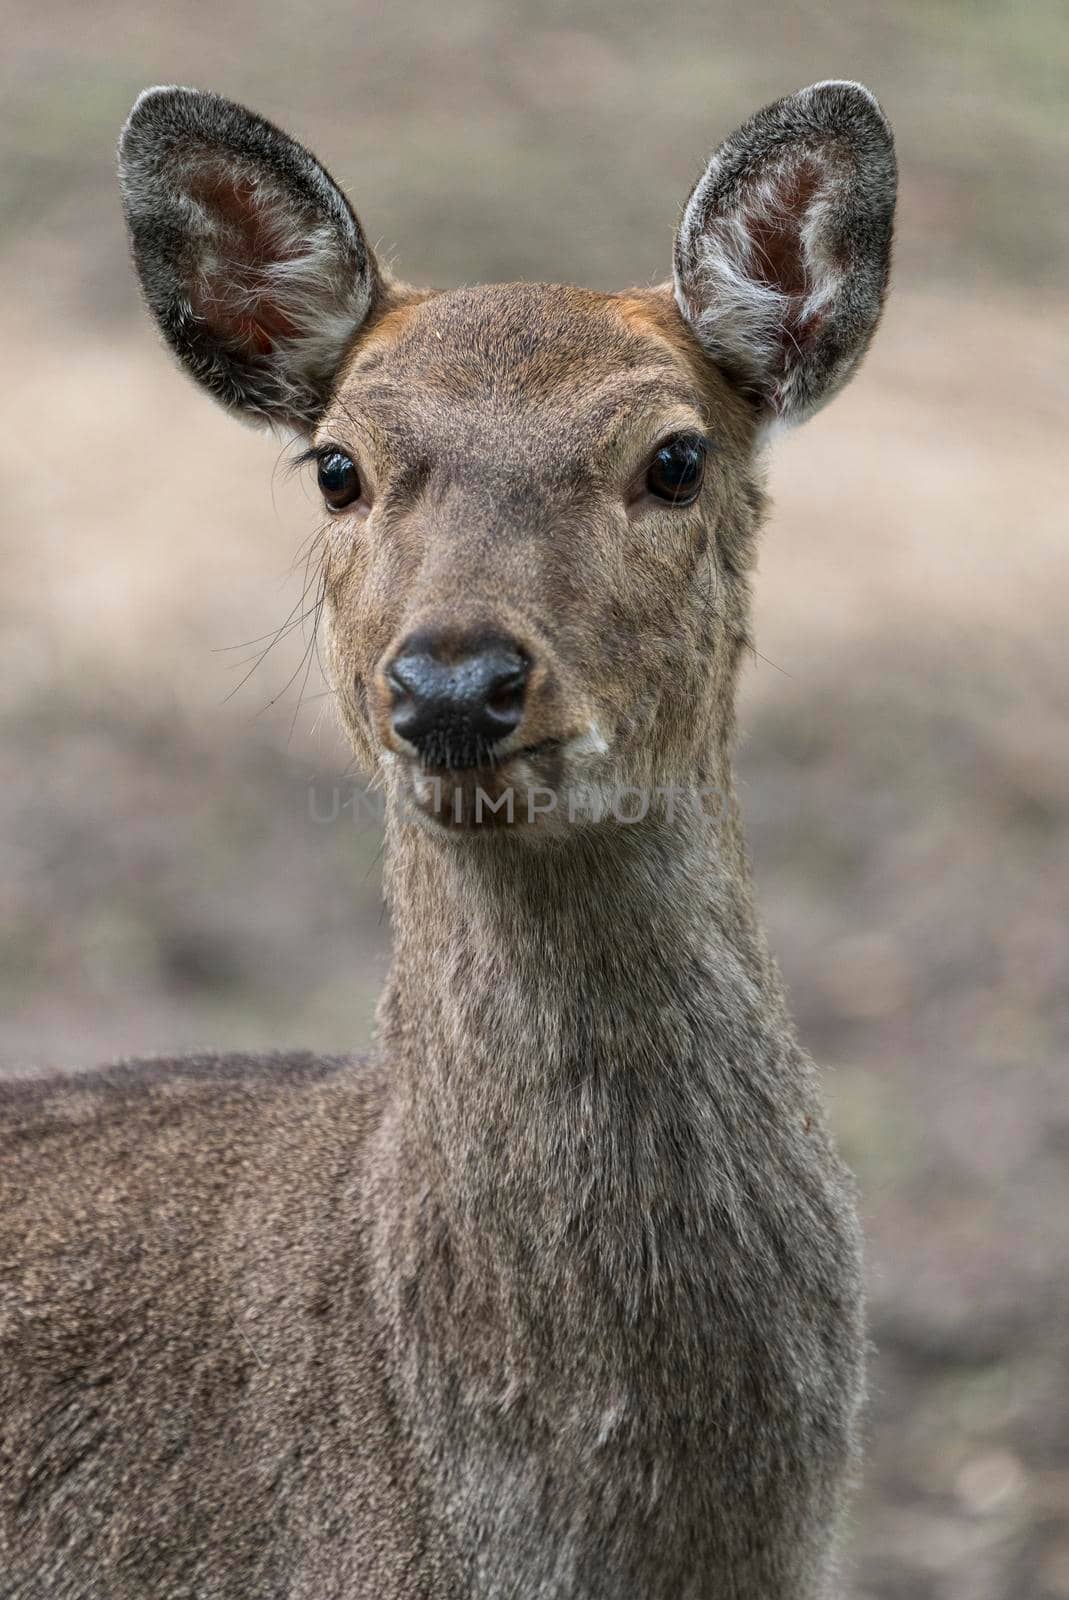 Dappled deer close-up portrait captured in the wild by Arsgera